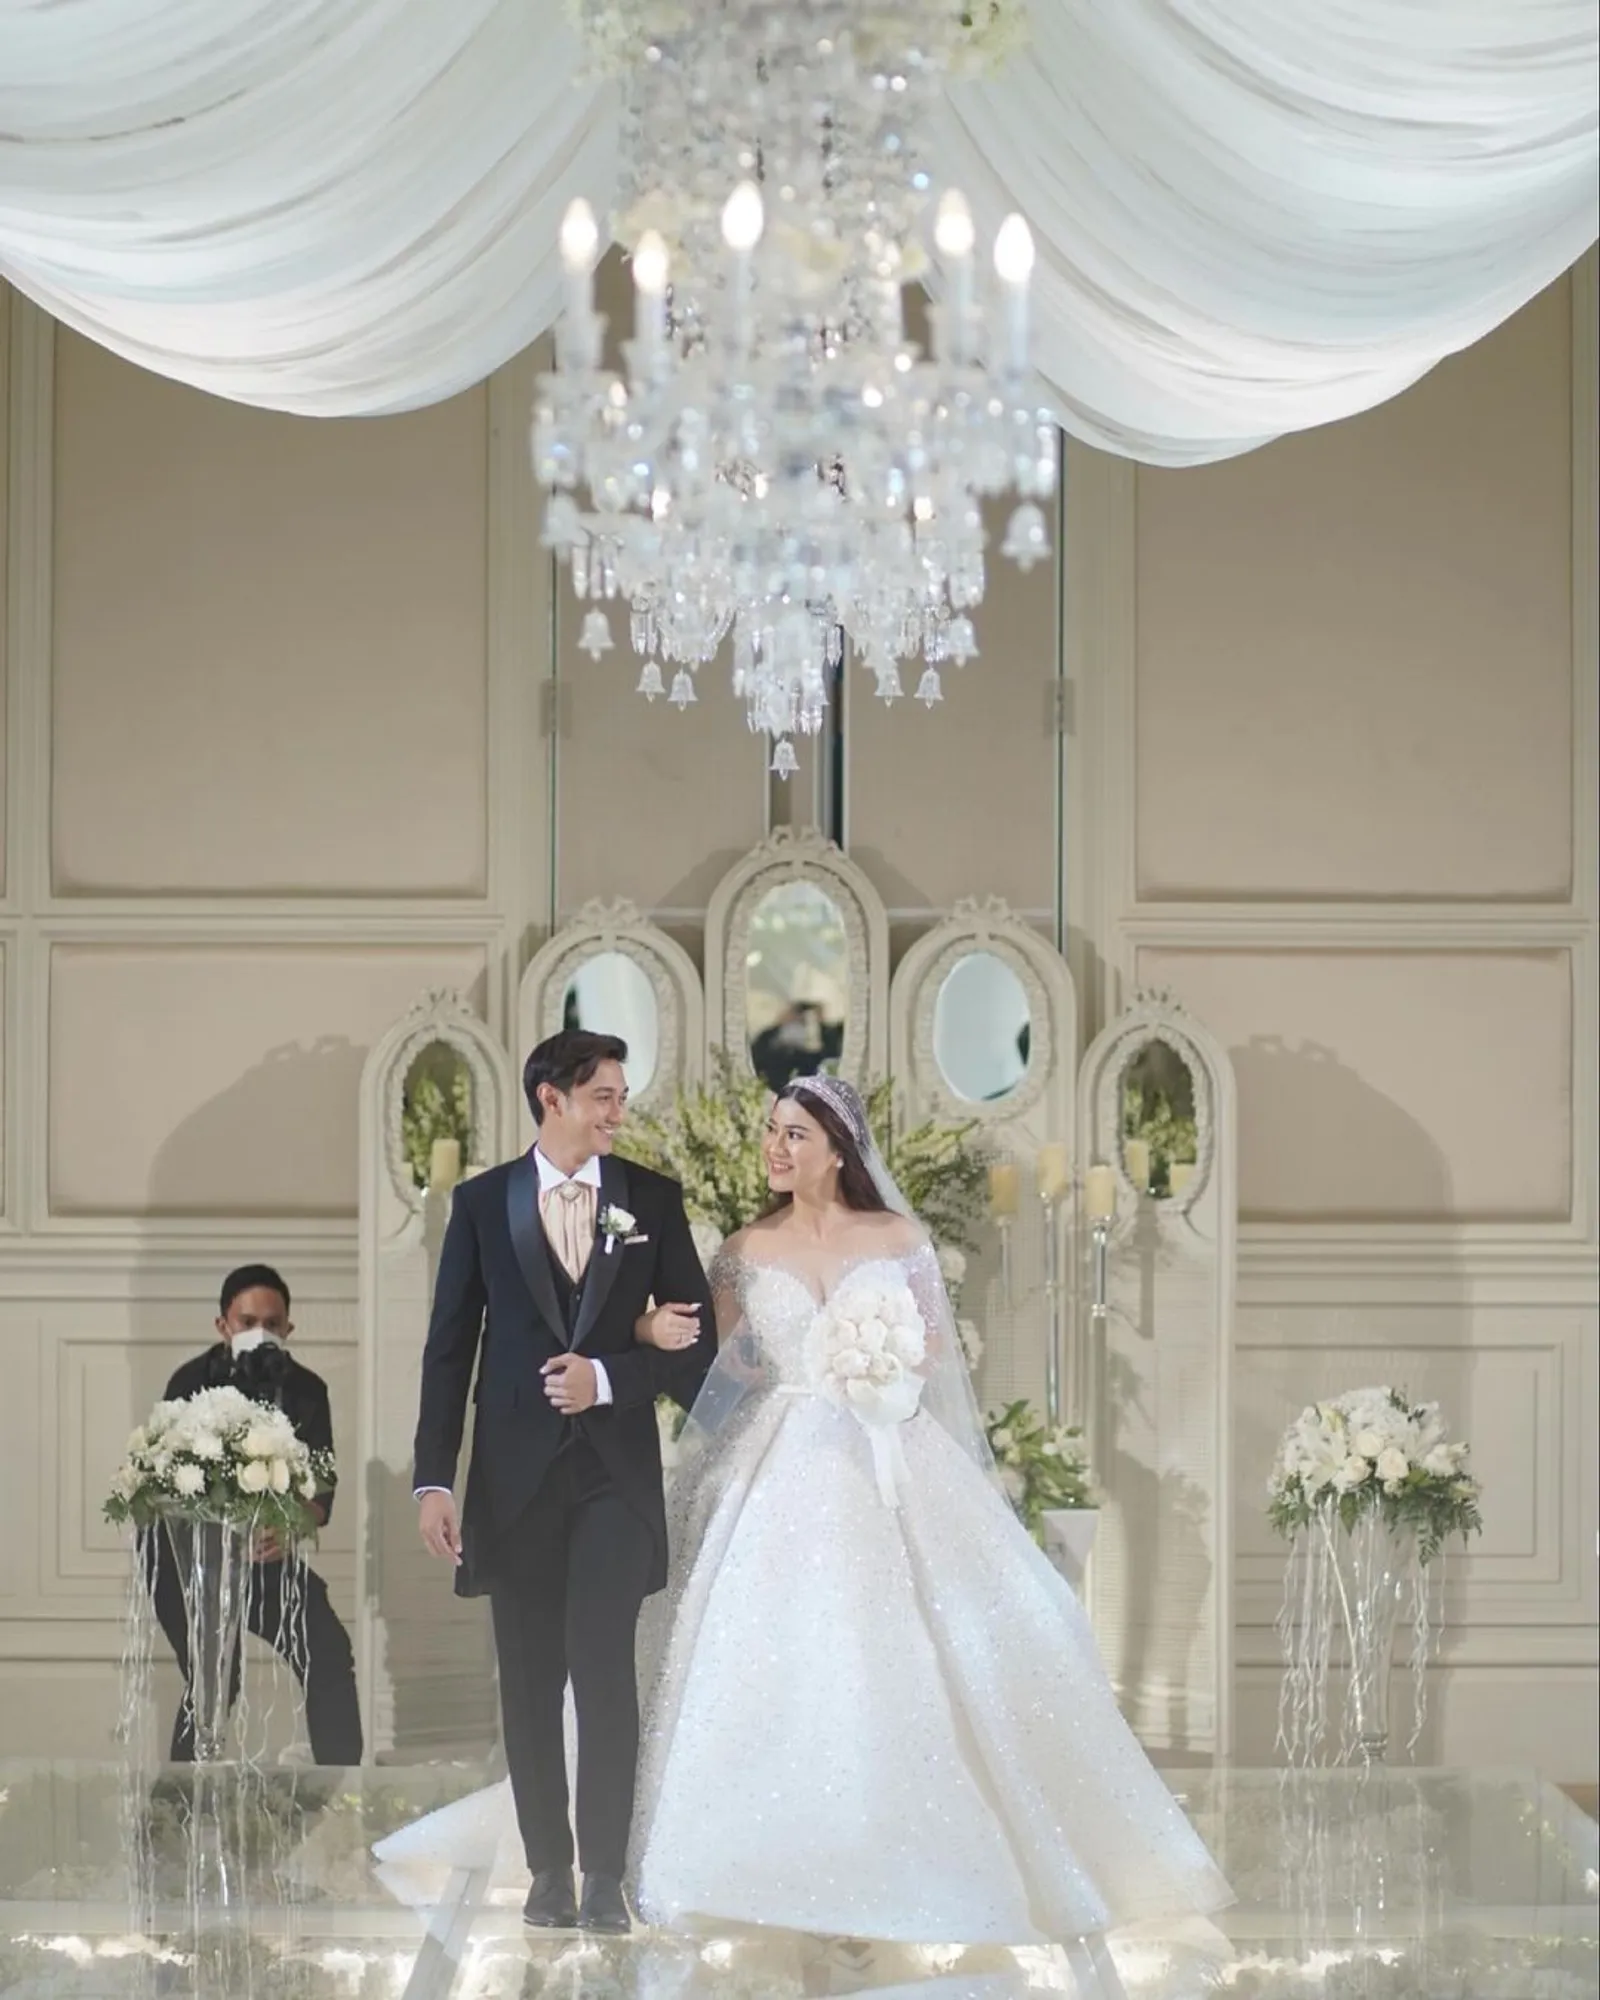 Gaun Glamor Felicya Angelista saat Menikah, Layaknya Putri Dongeng!